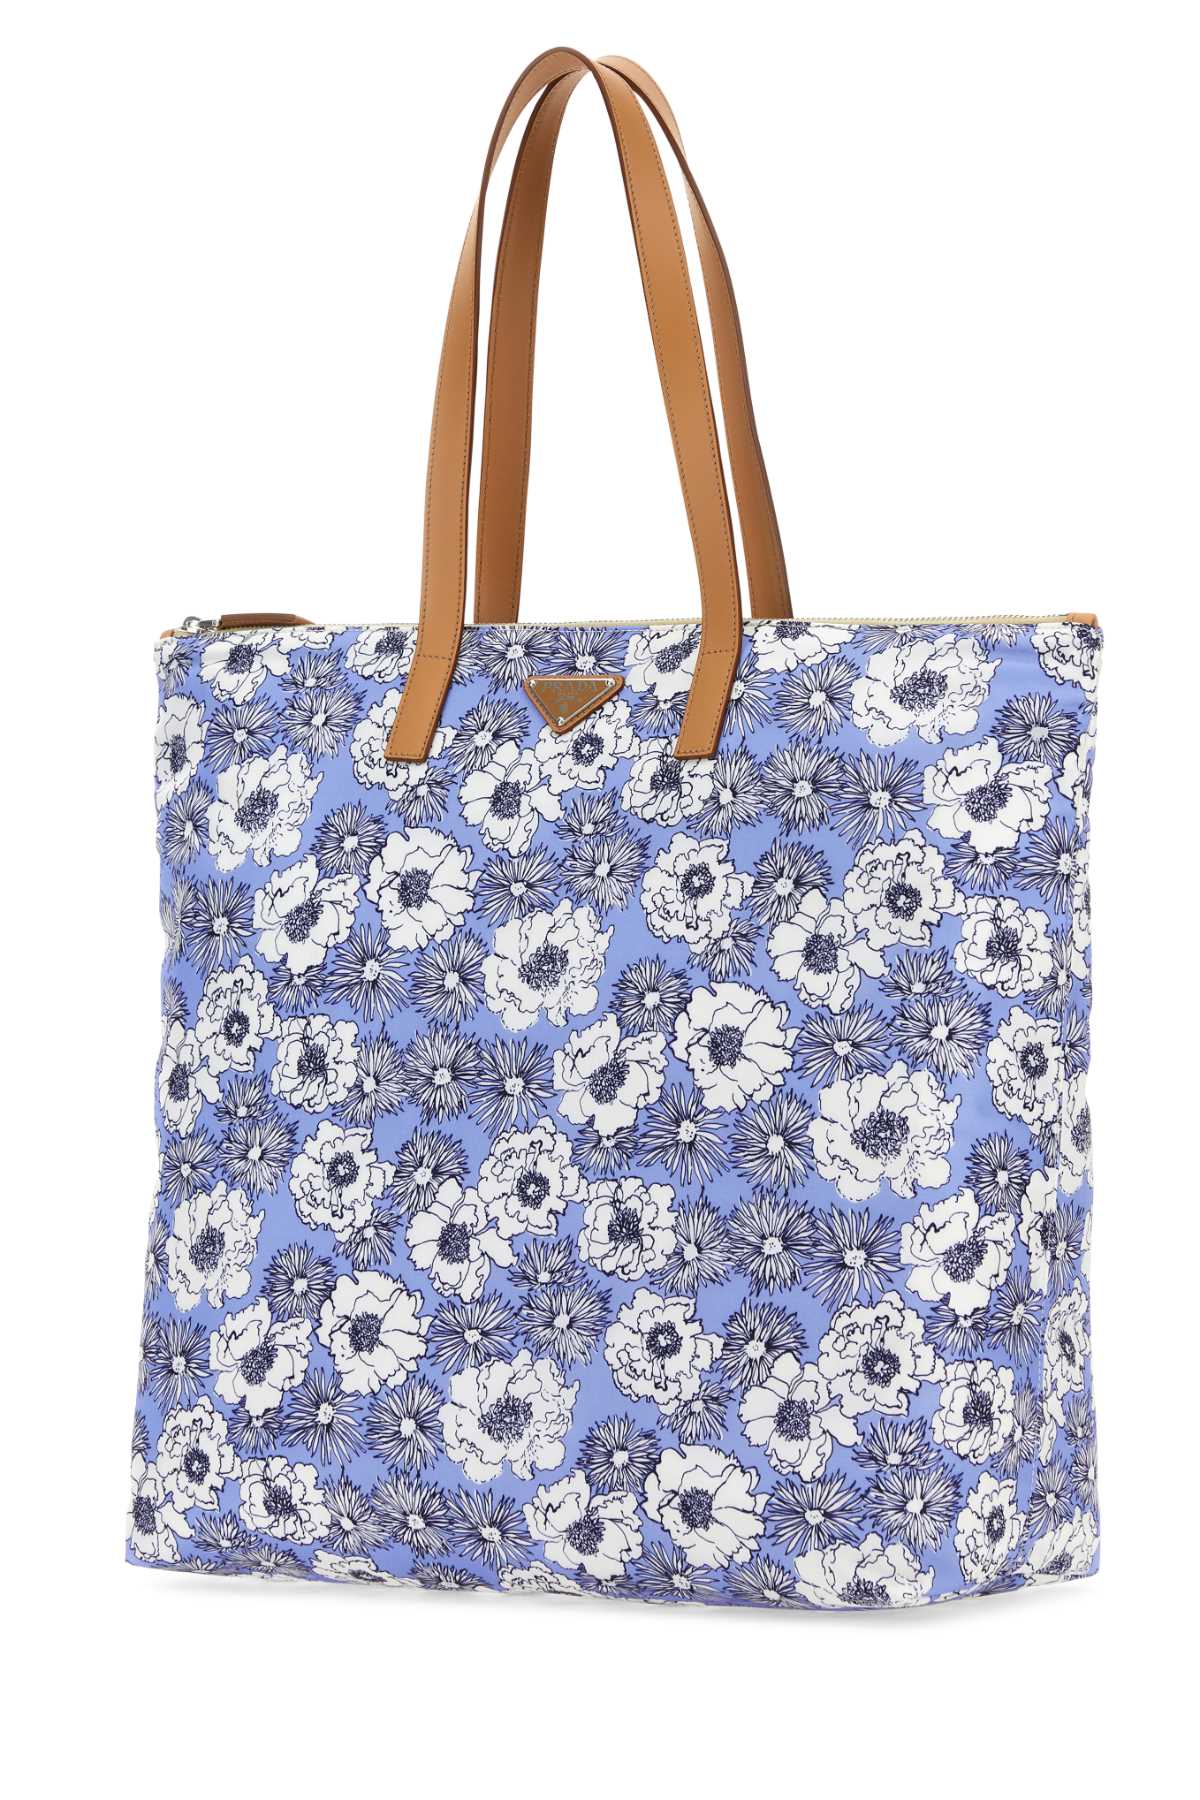 Prada Printed Re-nylon Shopping Bag In Blue